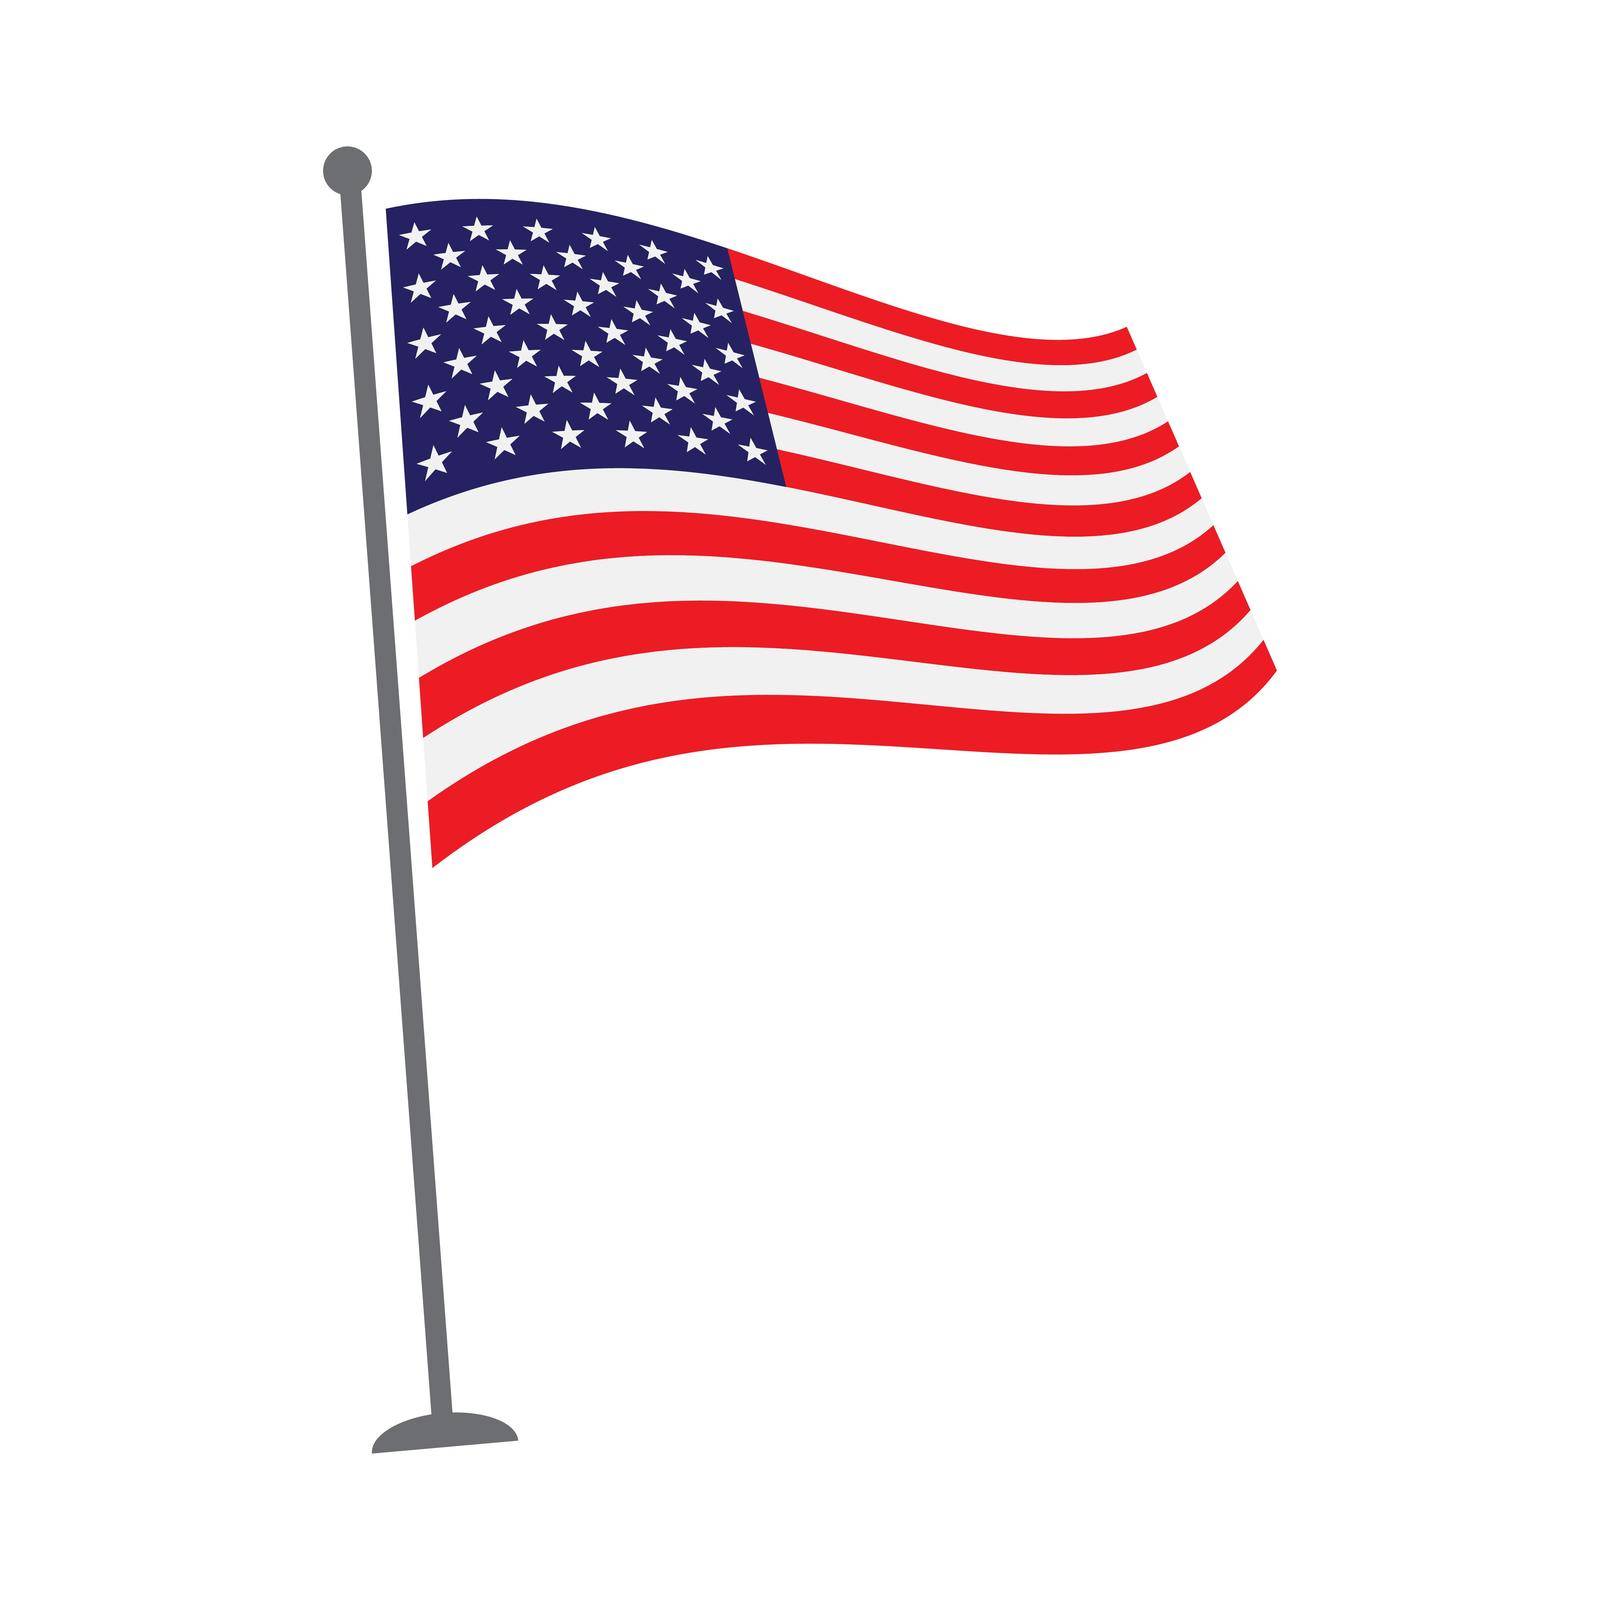 American flag illustration vector flat design eps 10